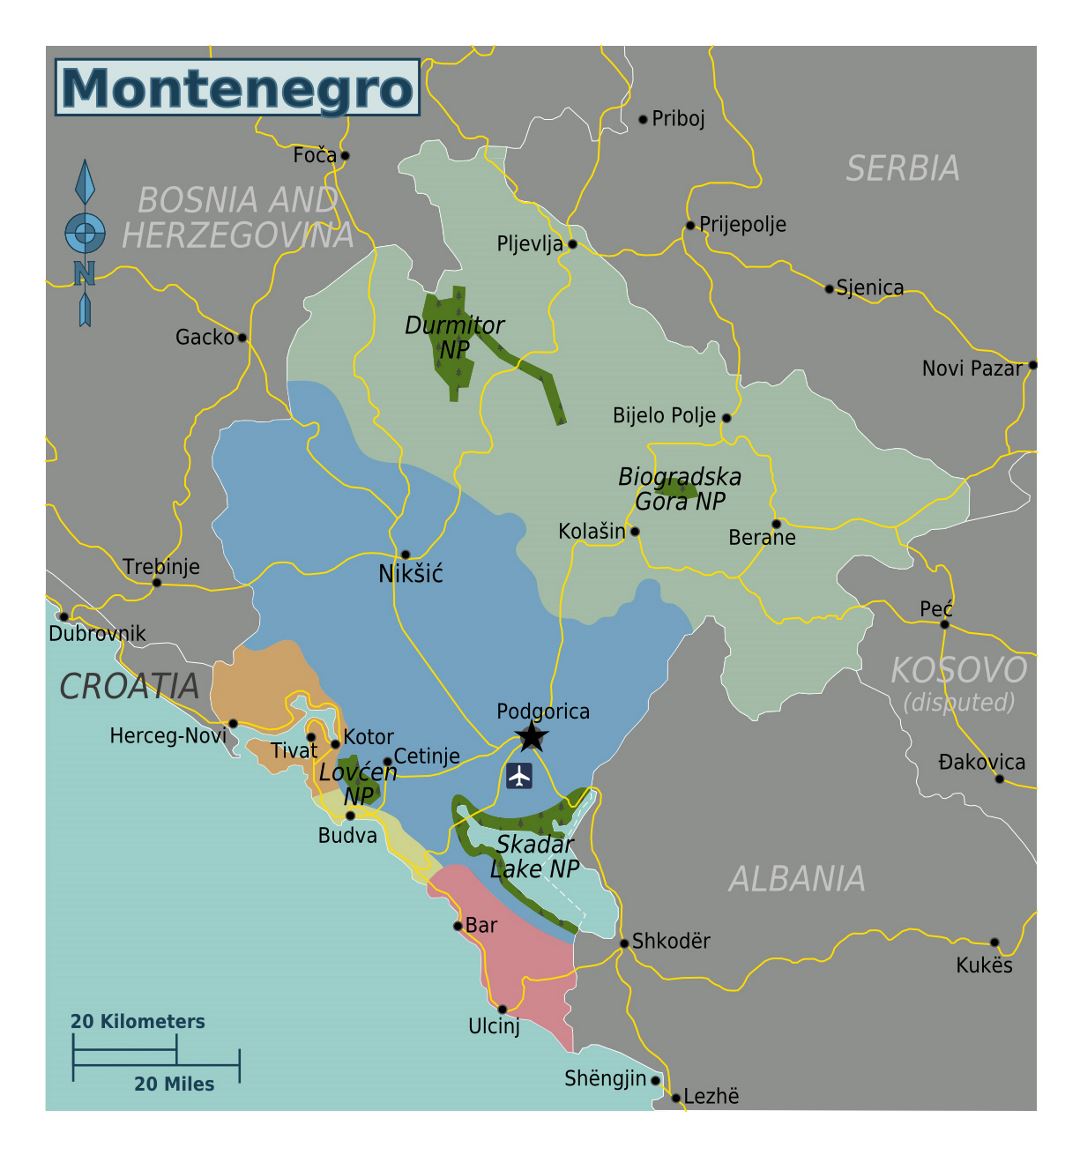 Large regions map of Montenegro